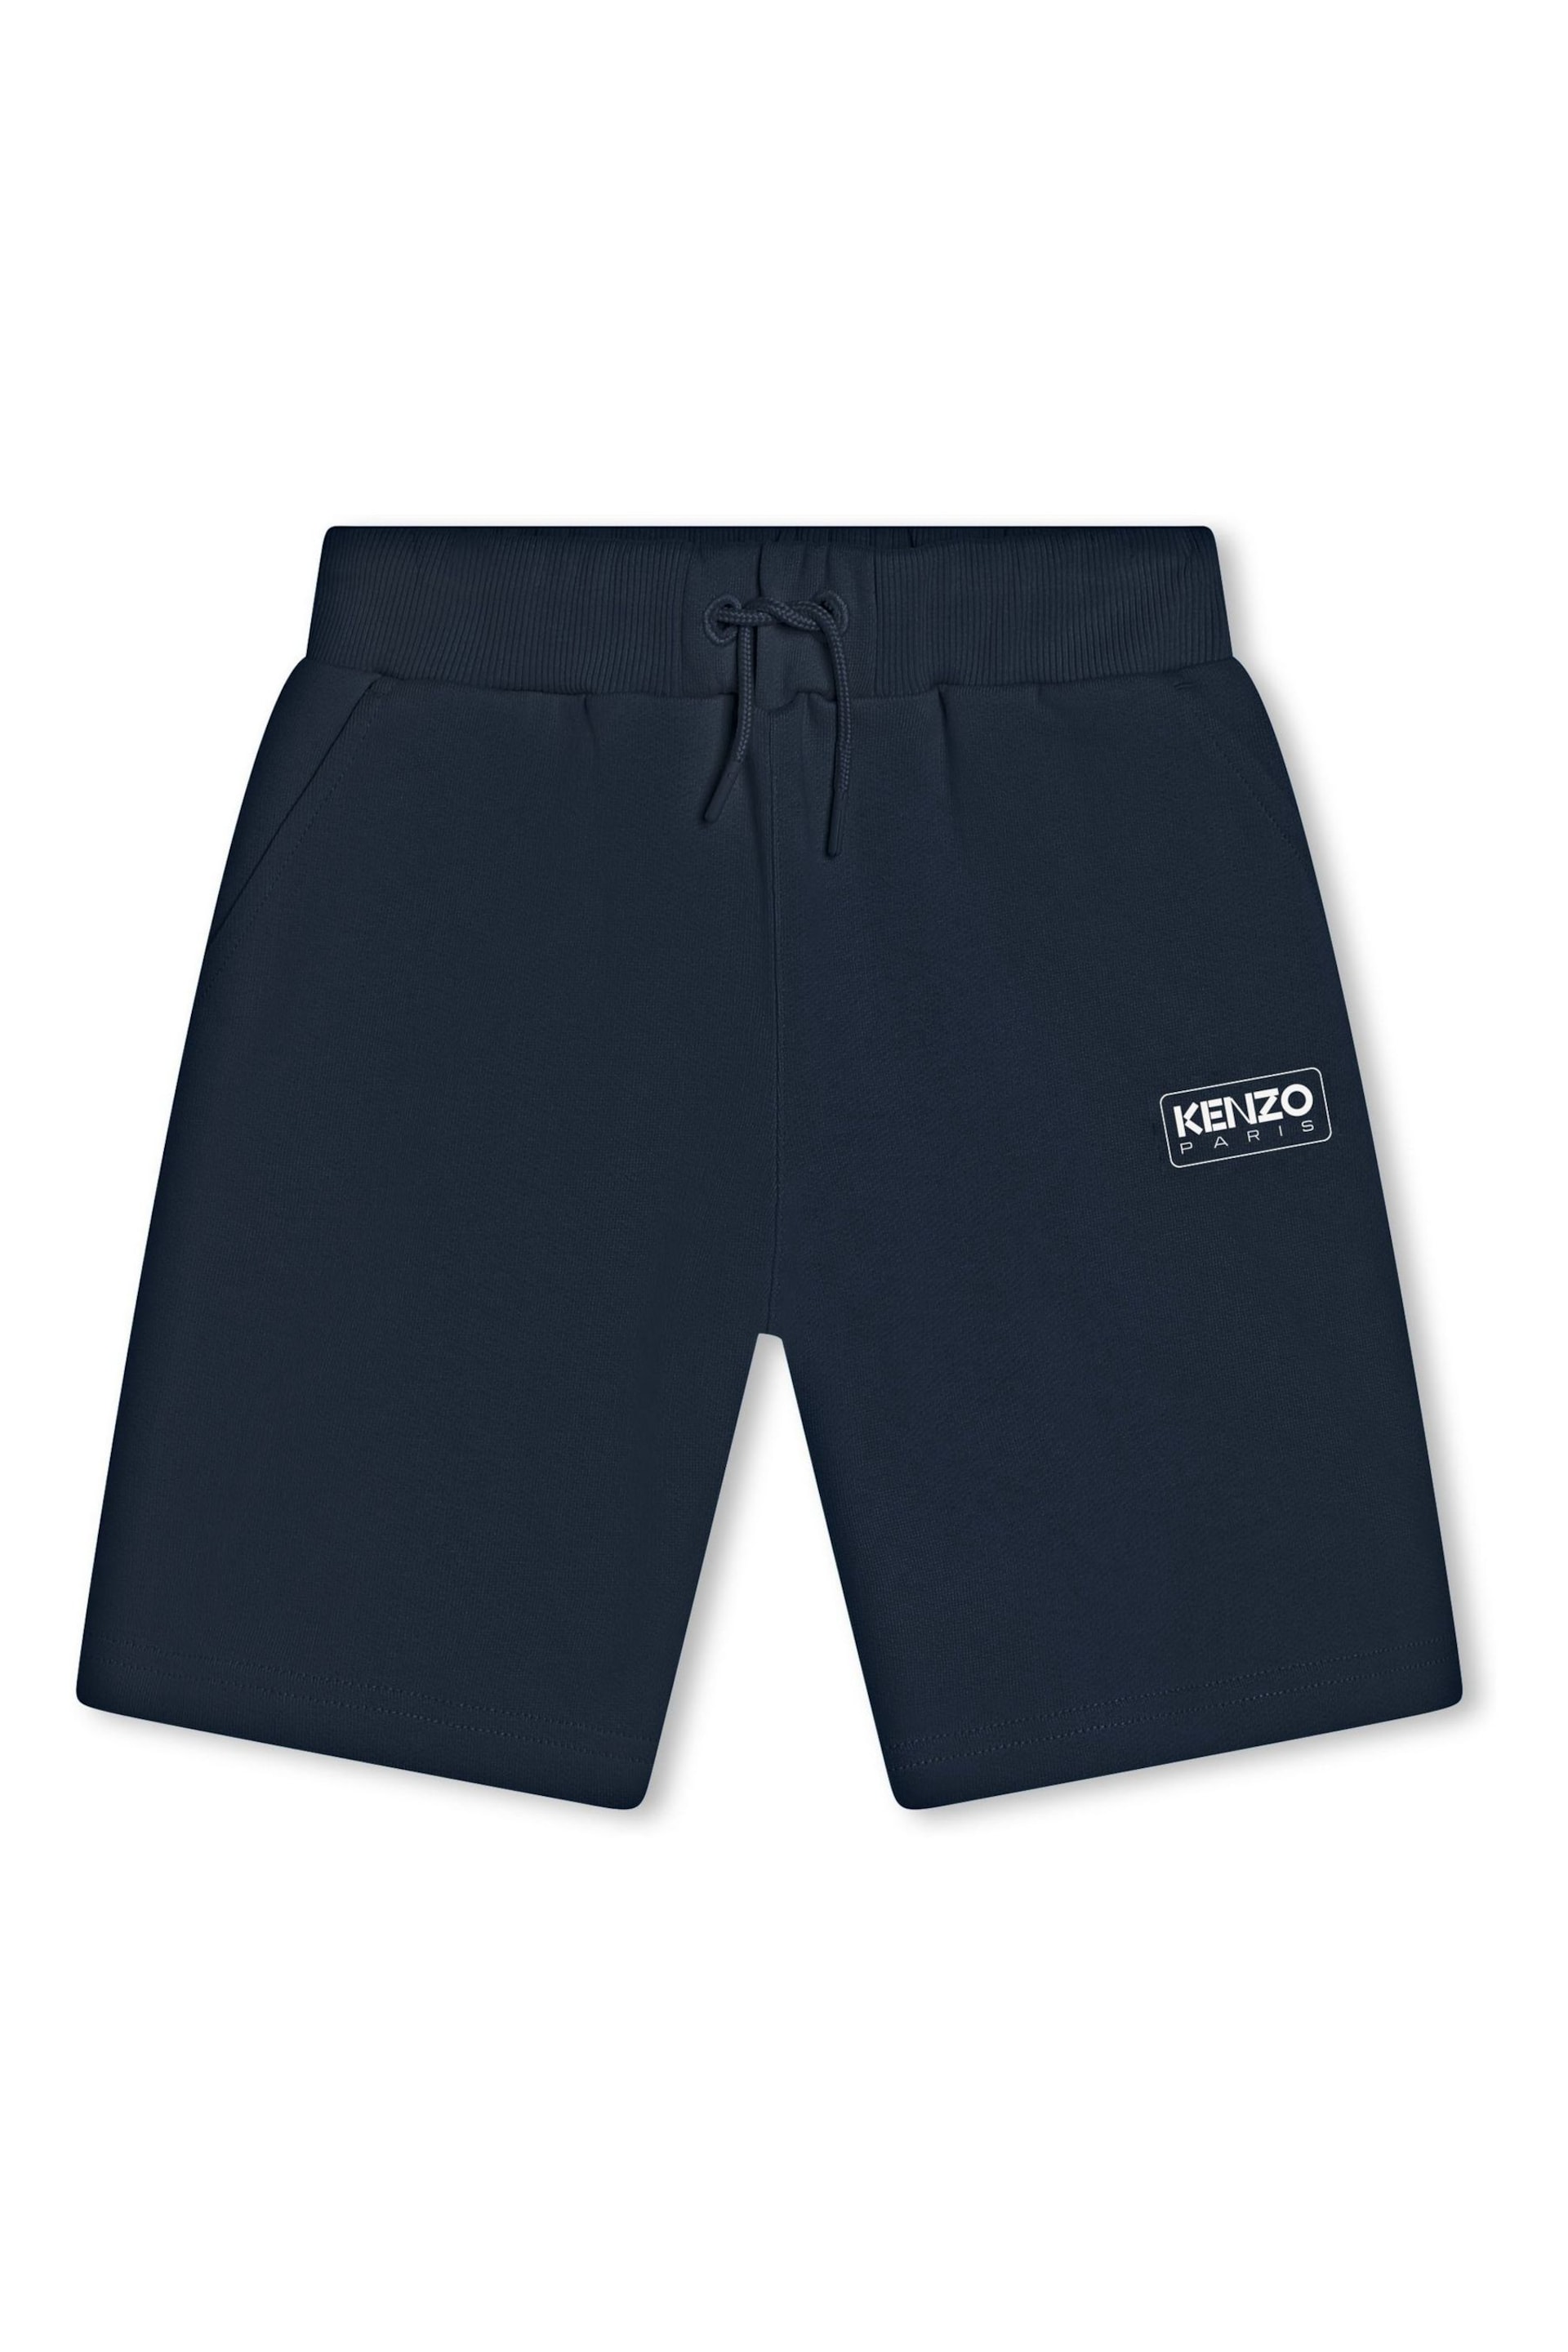 KENZO KIDS Blue Logo Jersey Shorts - Image 1 of 1